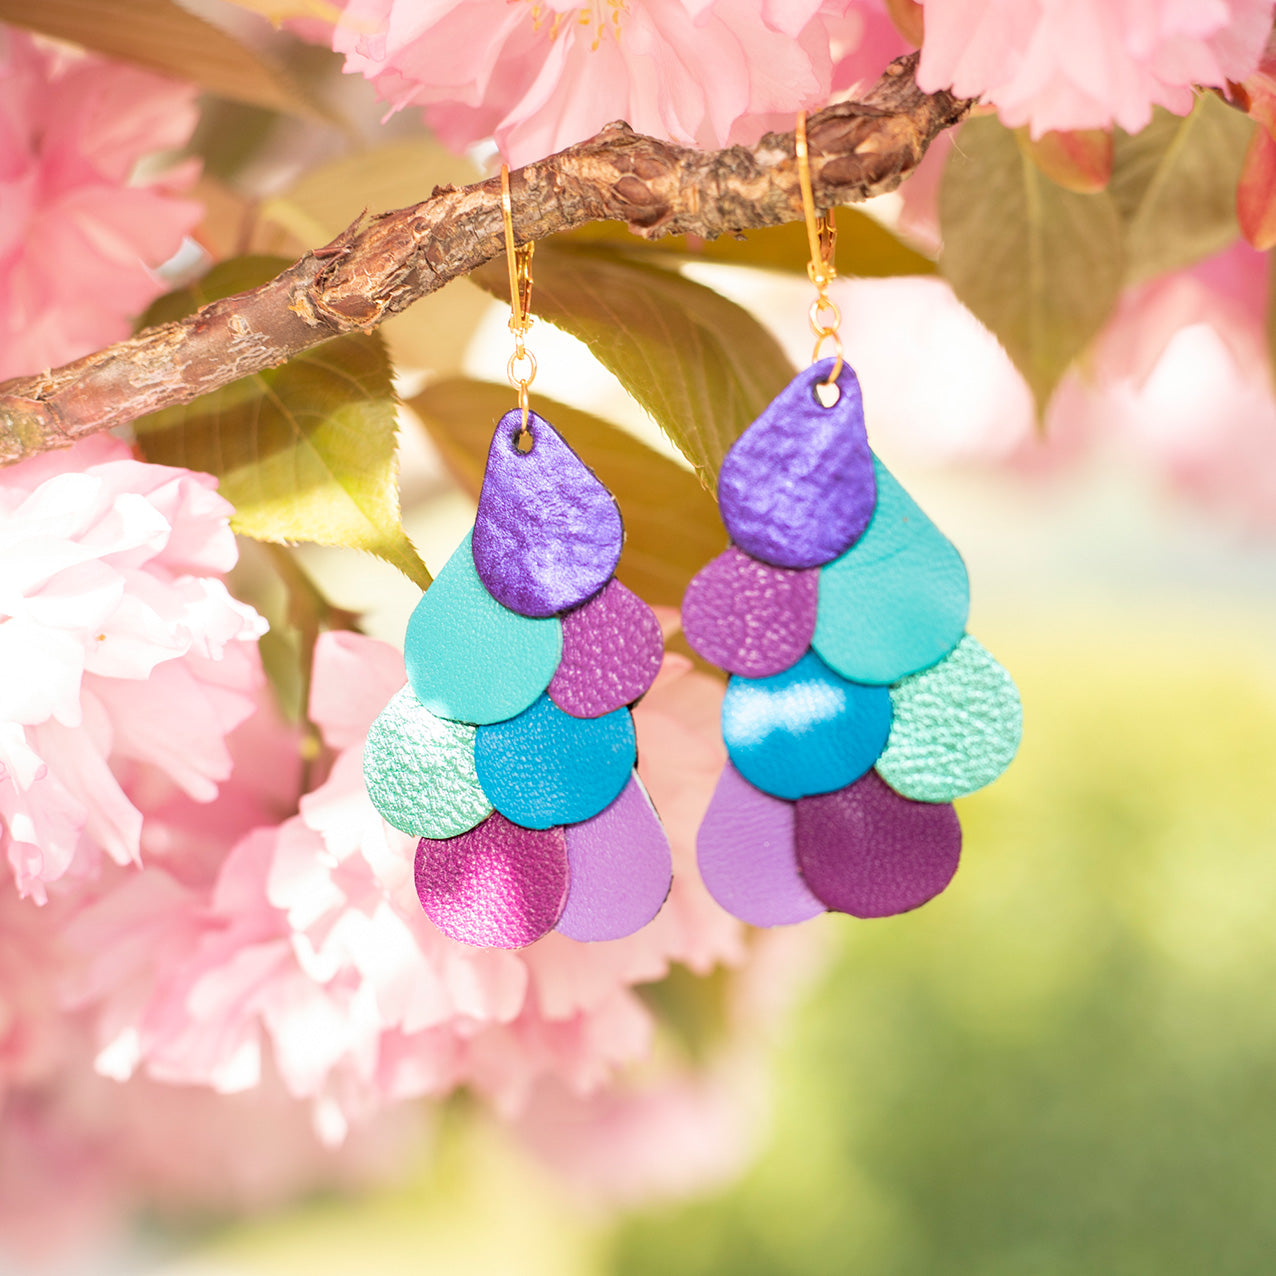 Purple, blue, turquoise Peacock Tail earrings